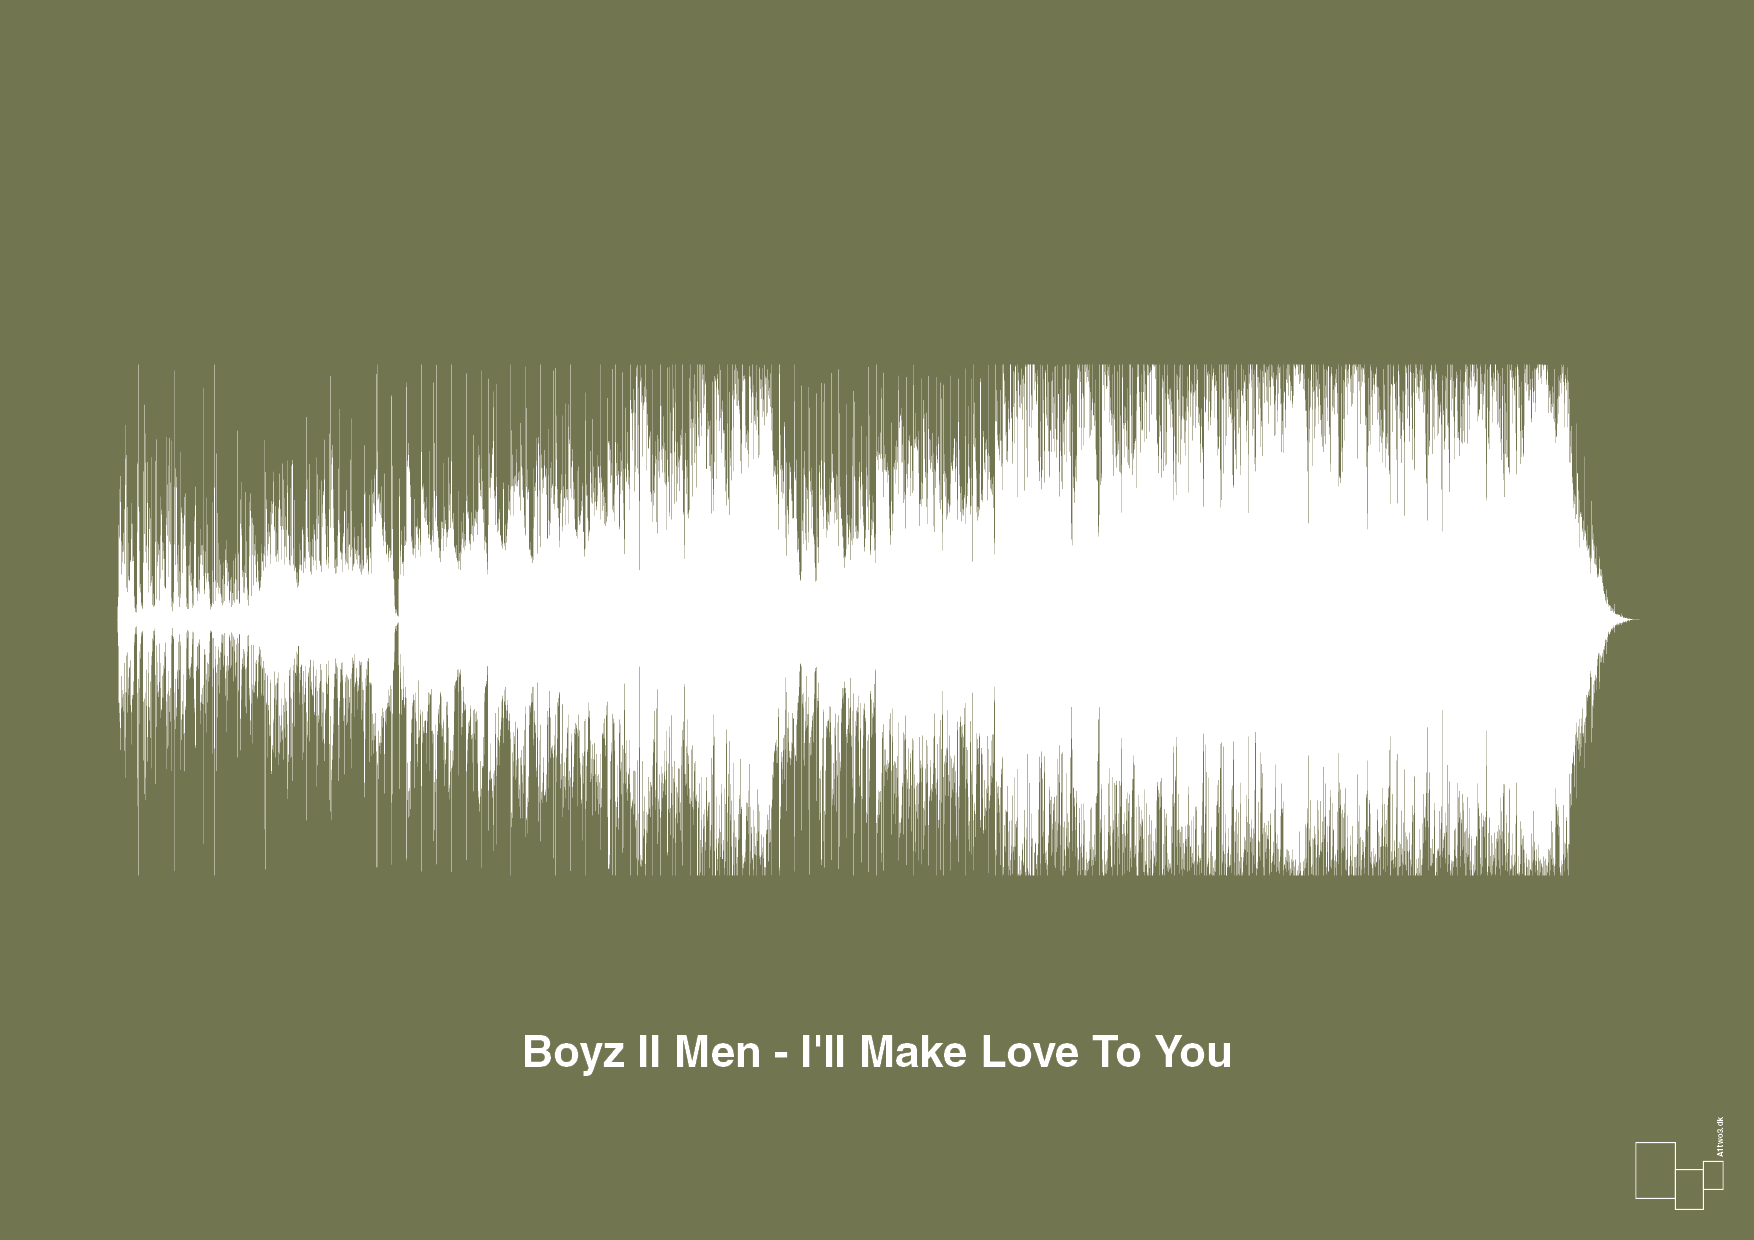 boyz II men - i'll make love to you - Plakat med Musik i Secret Meadow